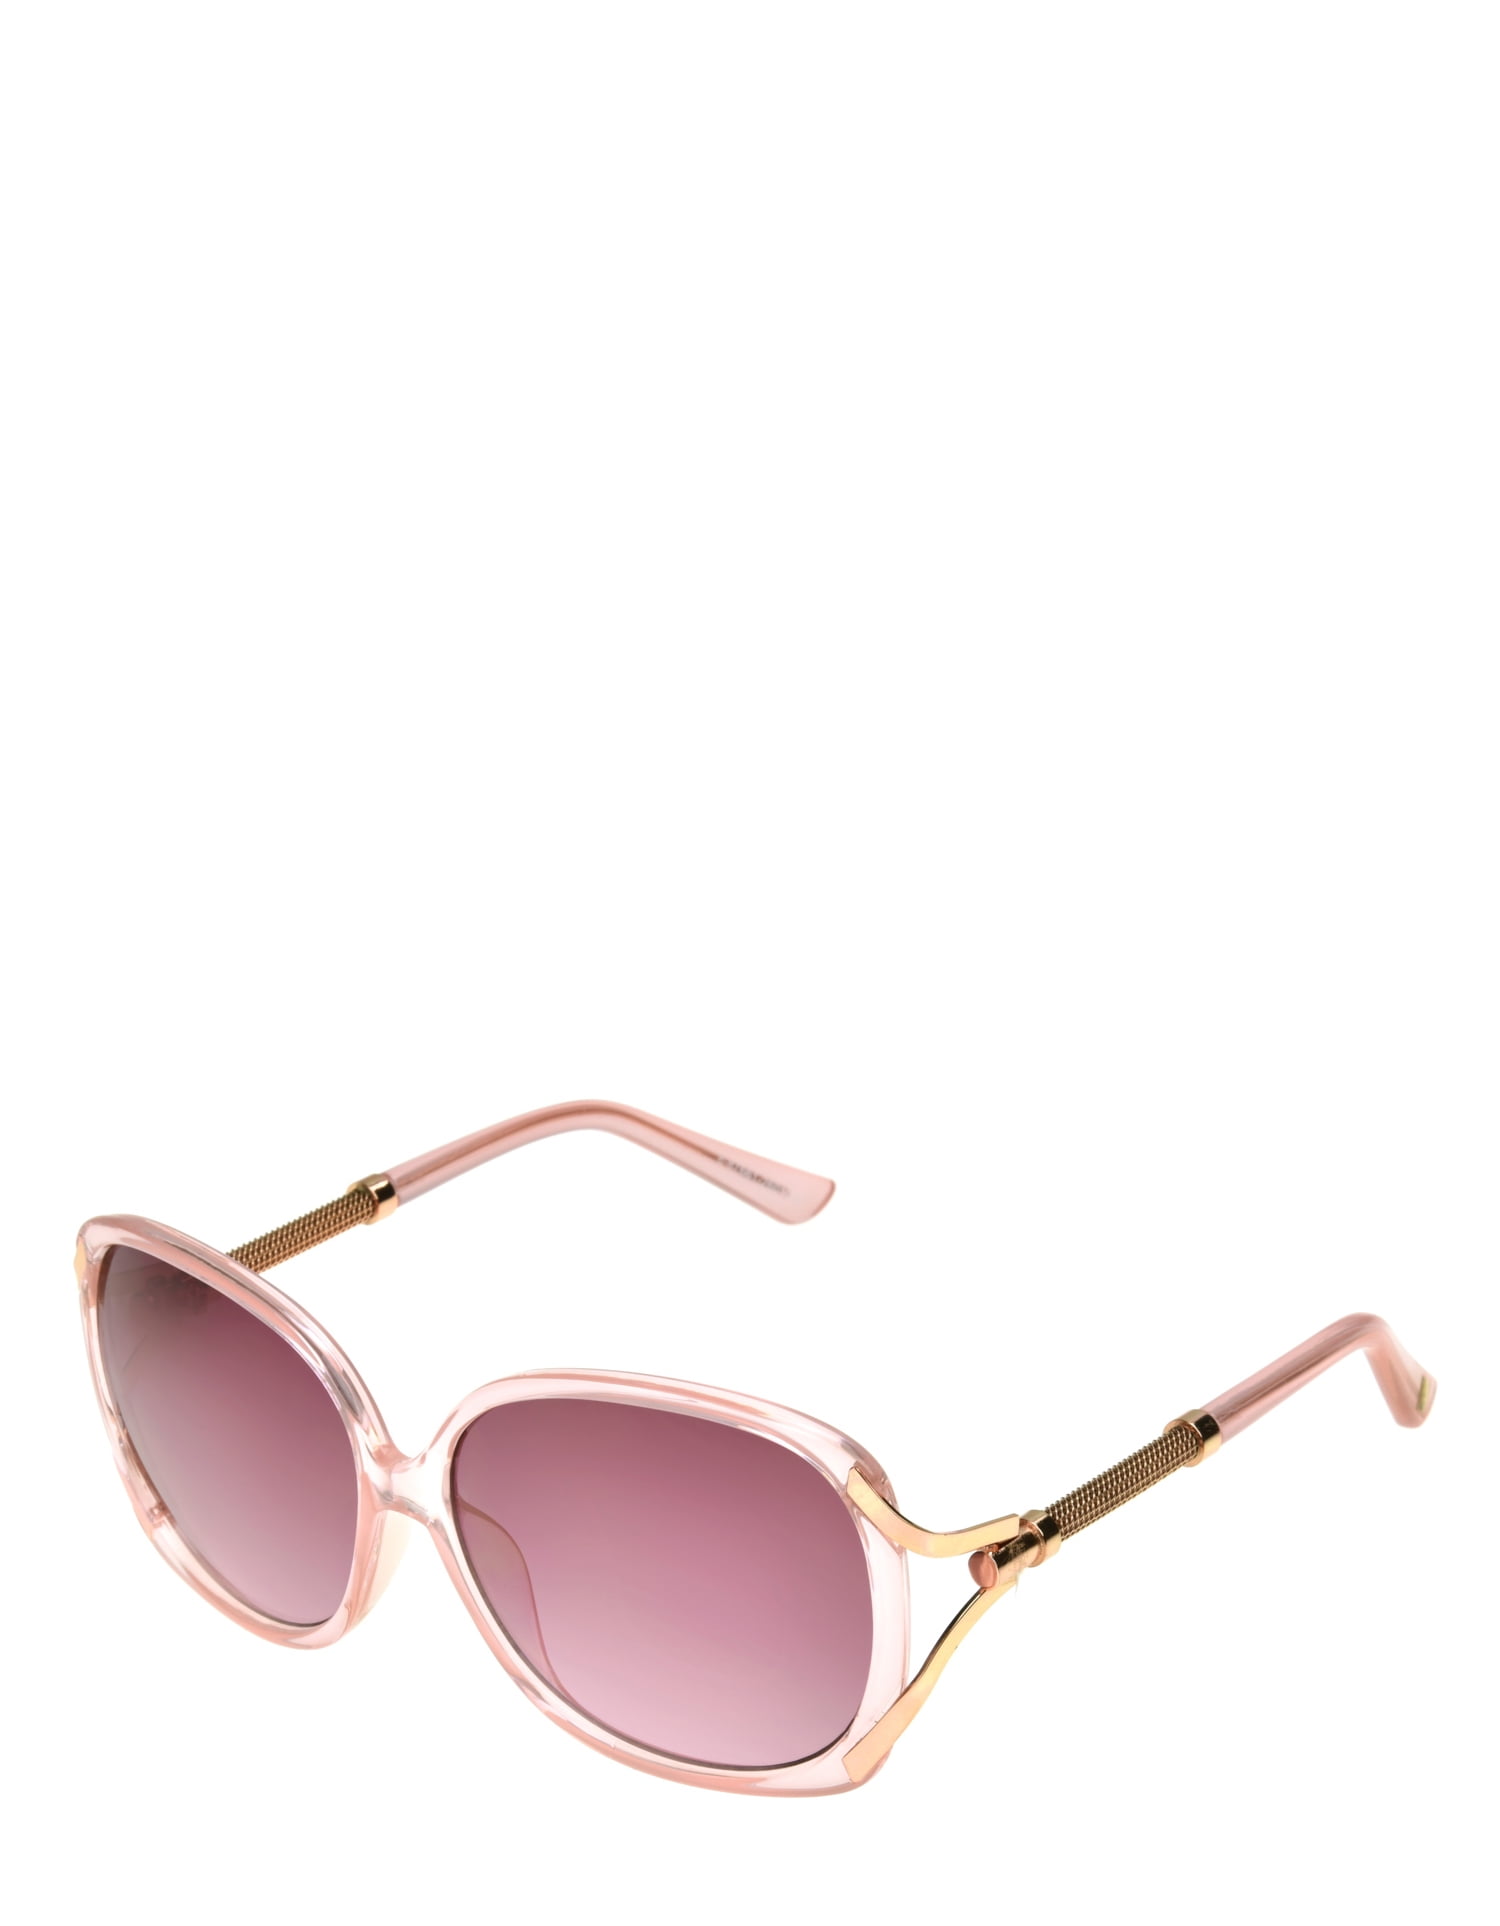 Women's Oval 5 Sunglasses – Walmart Inventory Checker – BrickSeek